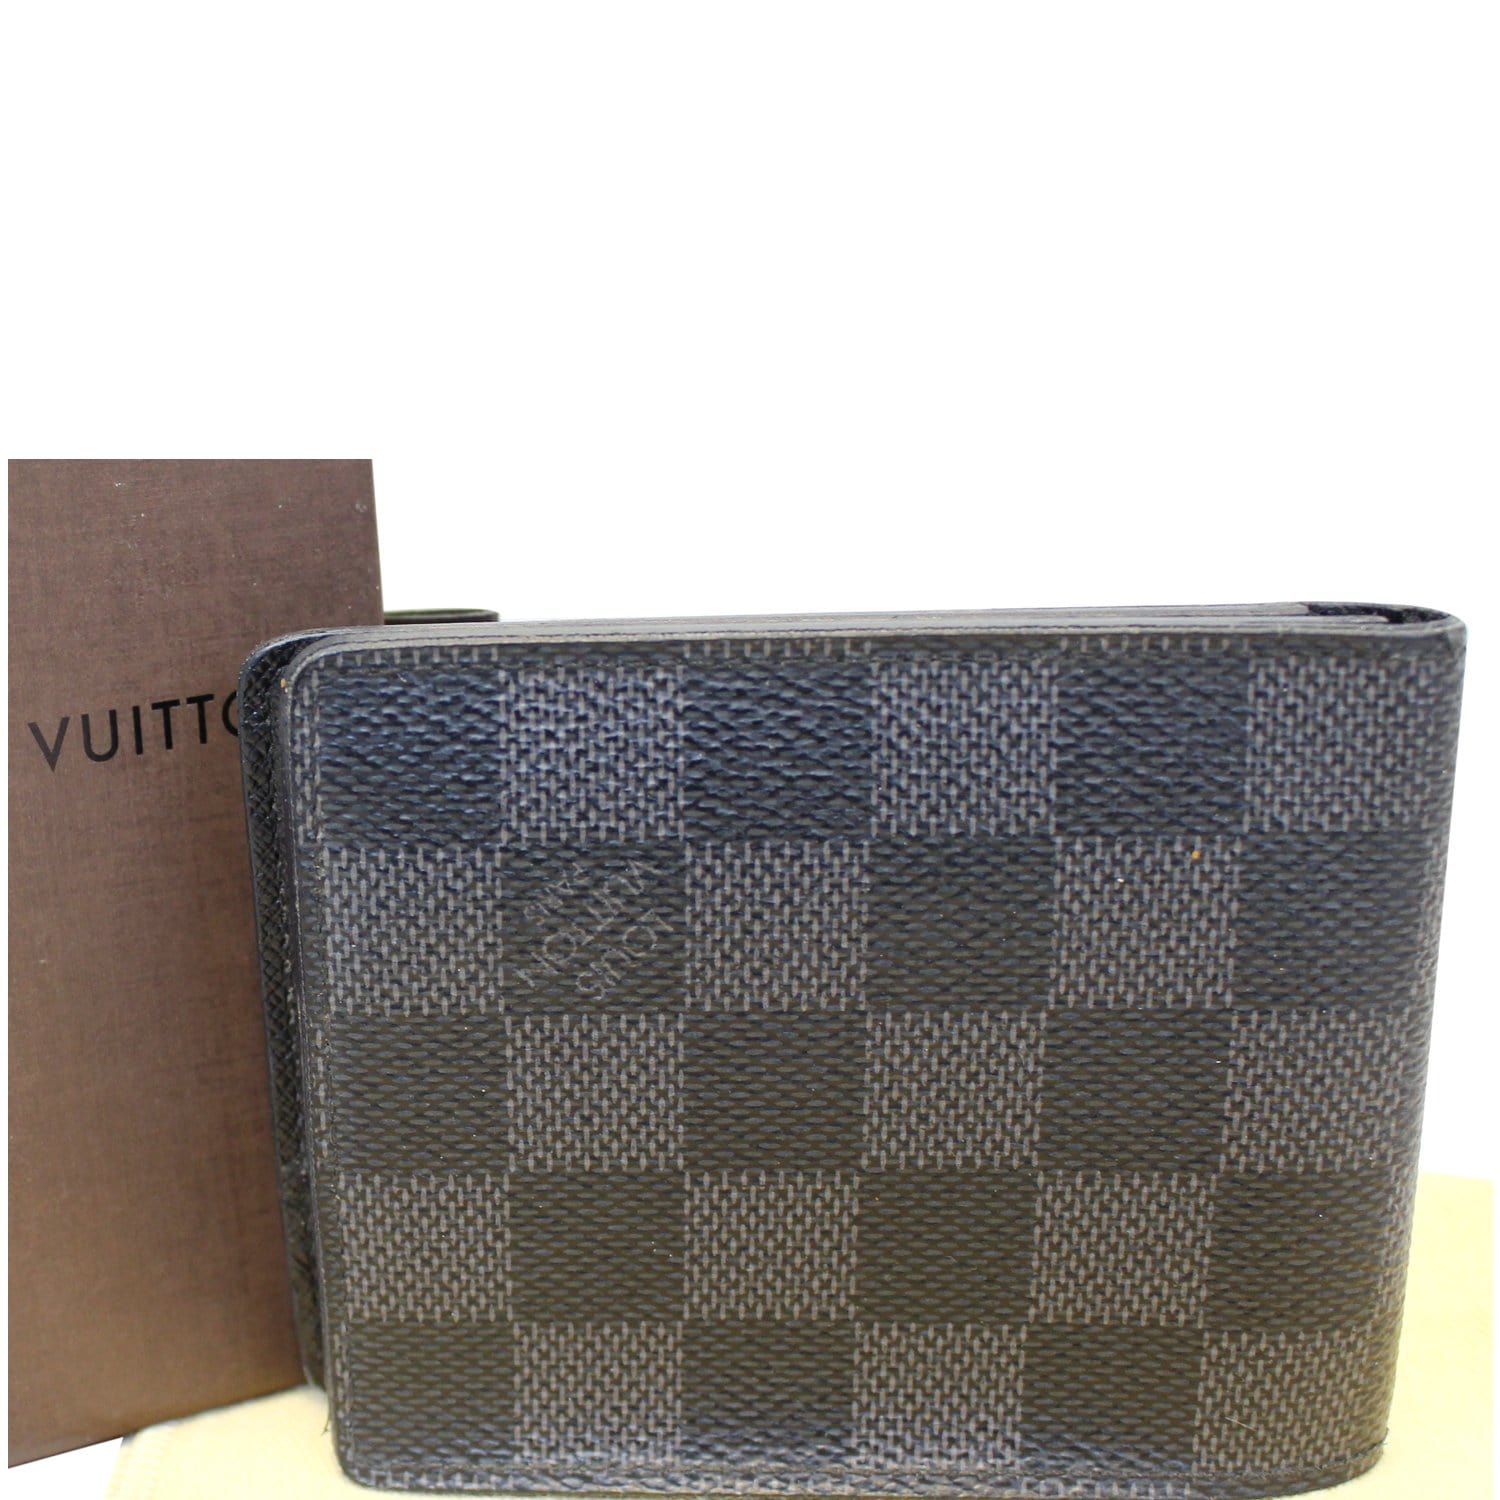 Louis Vuitton Multiple Wallet Damier Graphite Black/Red